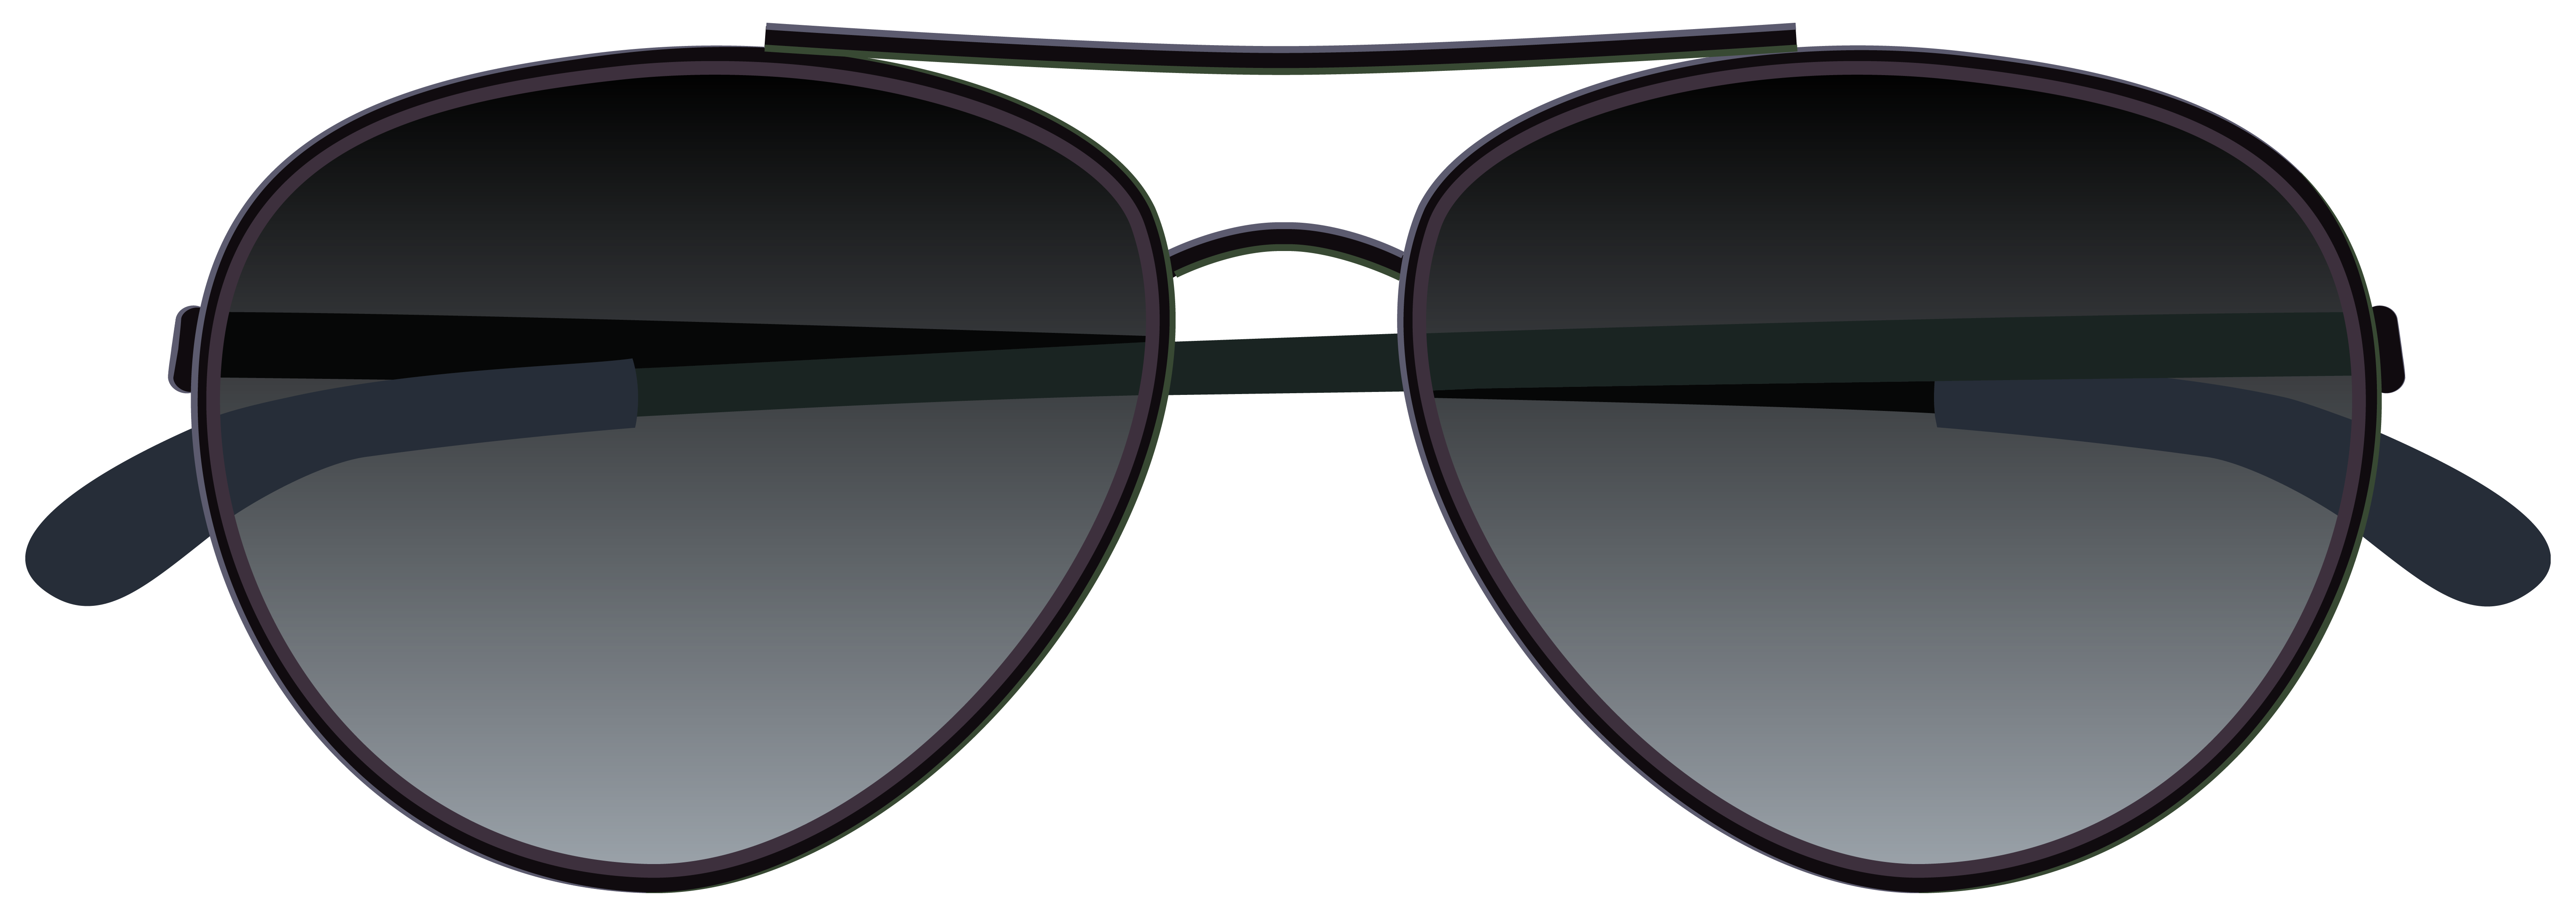 Sunglasses Transparent Background